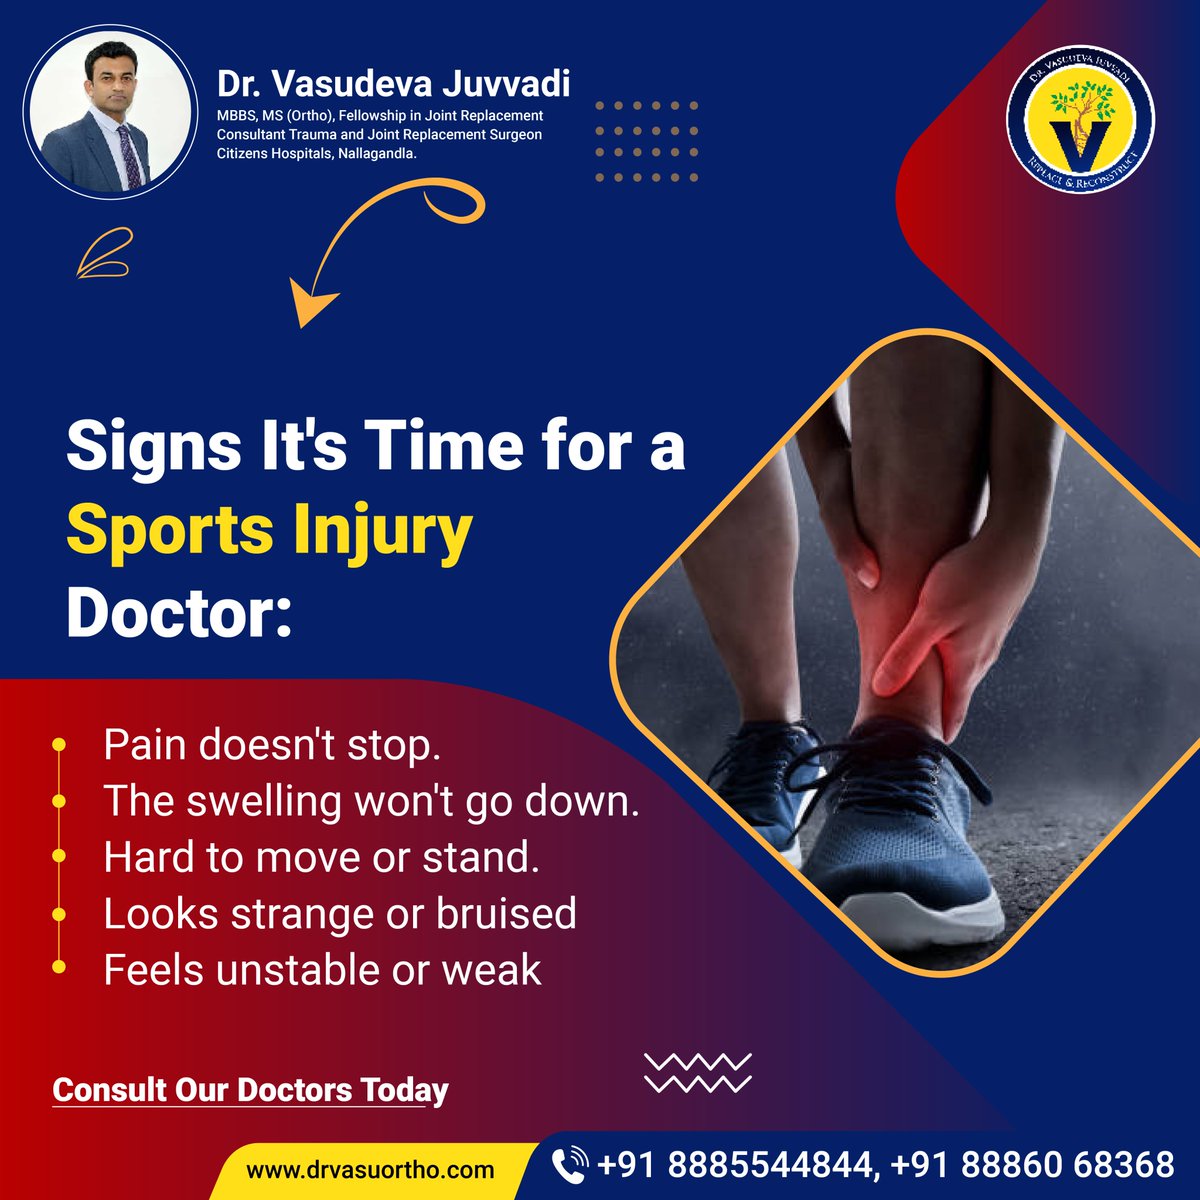 At Dr Vasudeva Juvvadi, we understand the frustration of being held back by injuries. Our team, led by Dr. Vasudeva Juvvadi, specialises in orthopaedics, focusing on getting you back in the game.

#OrthopedicExpert #sportinjury #swelling #injuries #OrthopedicCare #orthopaedics